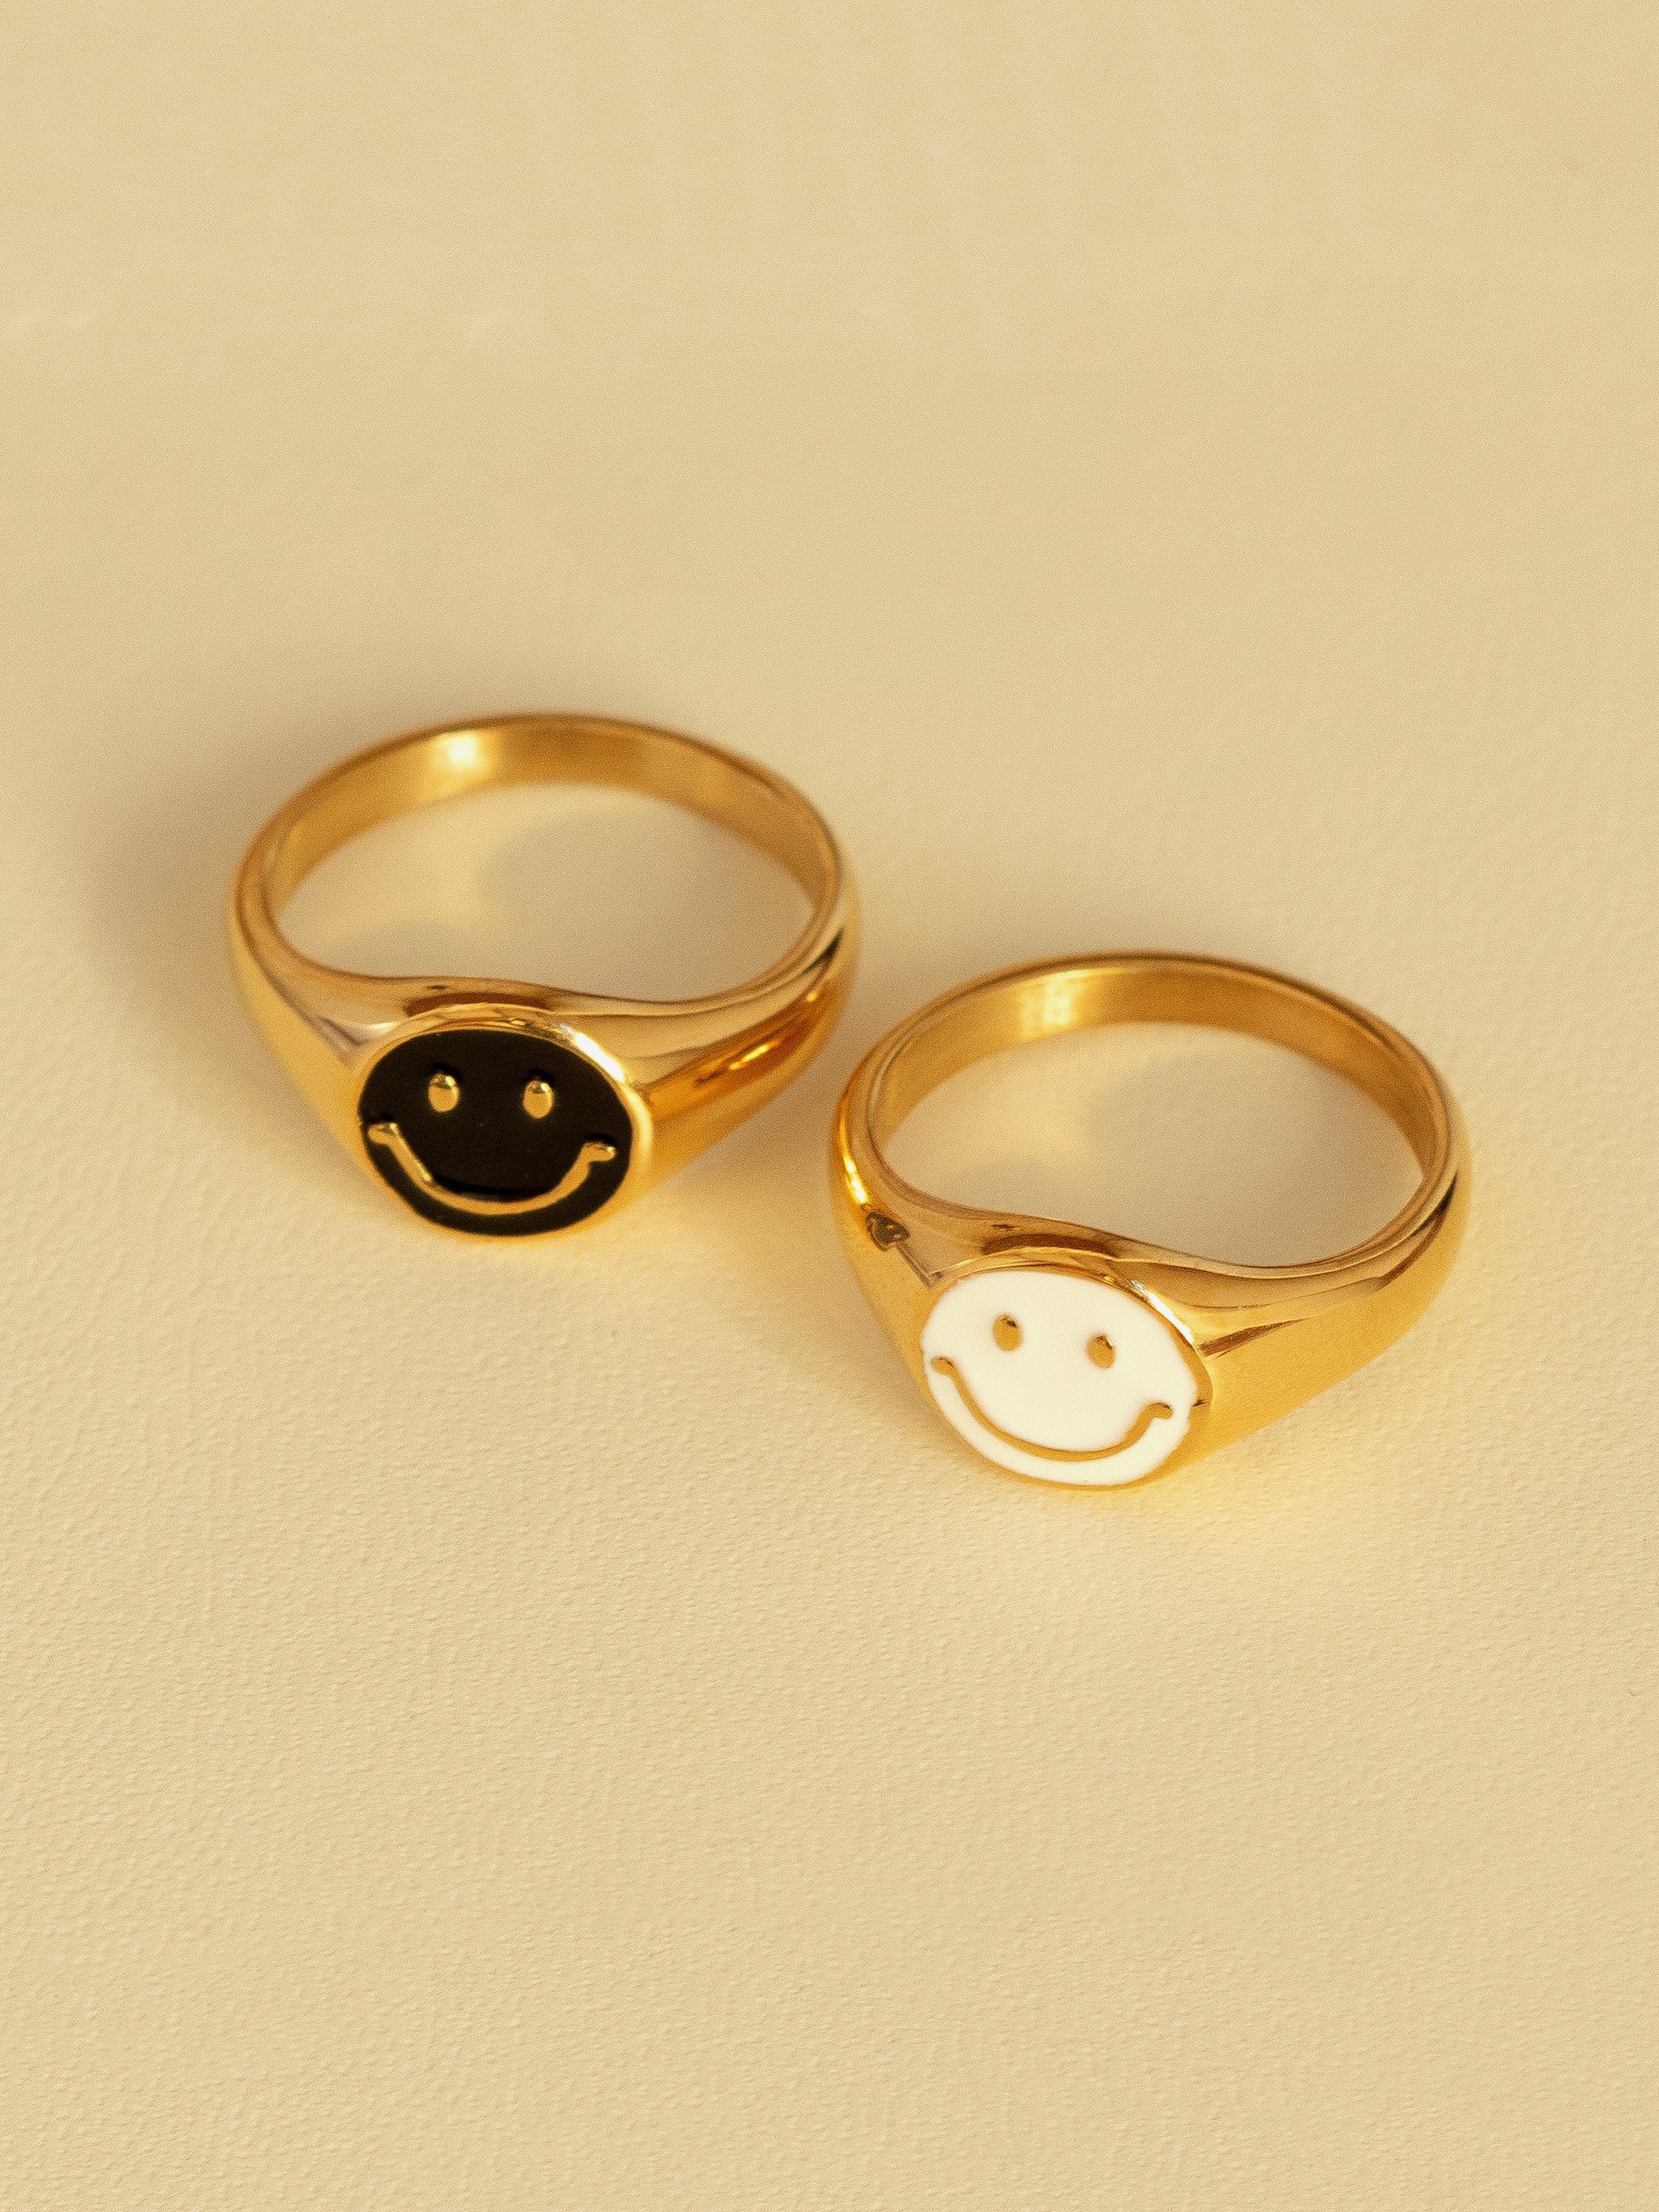 Gold Happy Face Signet Ring - Black Enamel